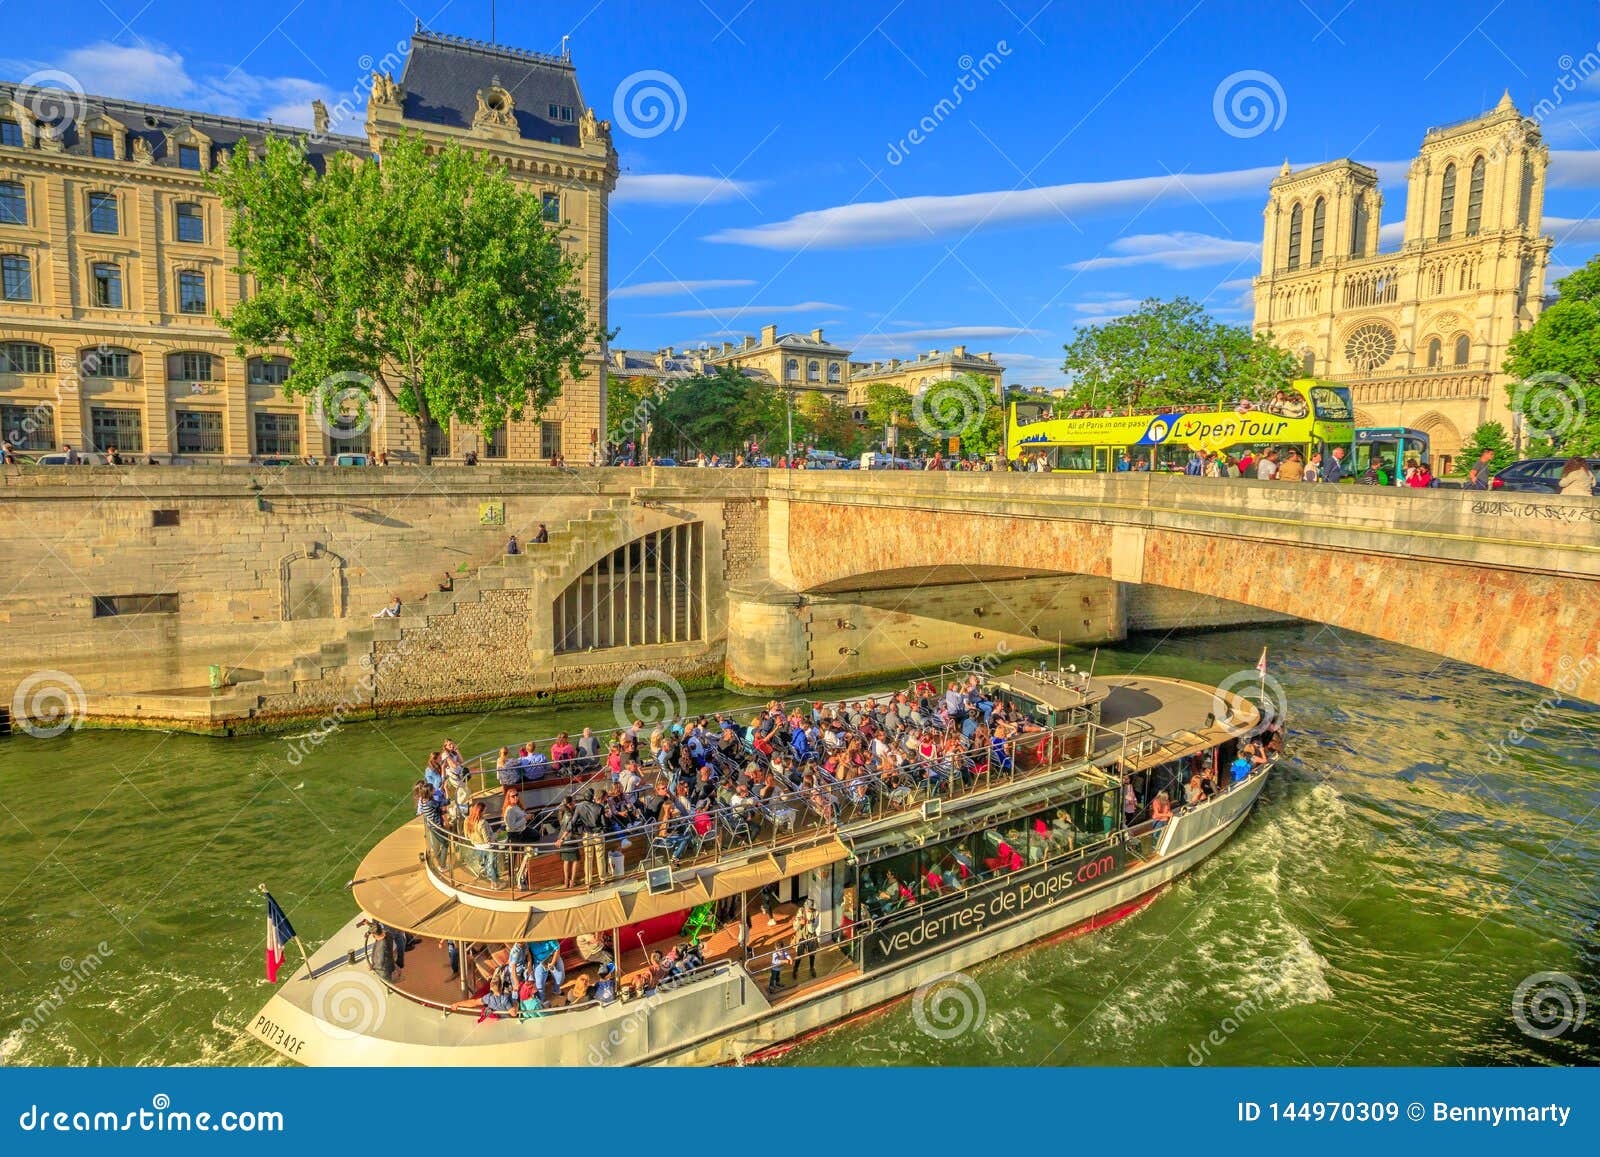 Cruise Seine River Paris France July Bateaux Mouches Many Tourist Trip Sunset River Seine Cathedral 144970309 